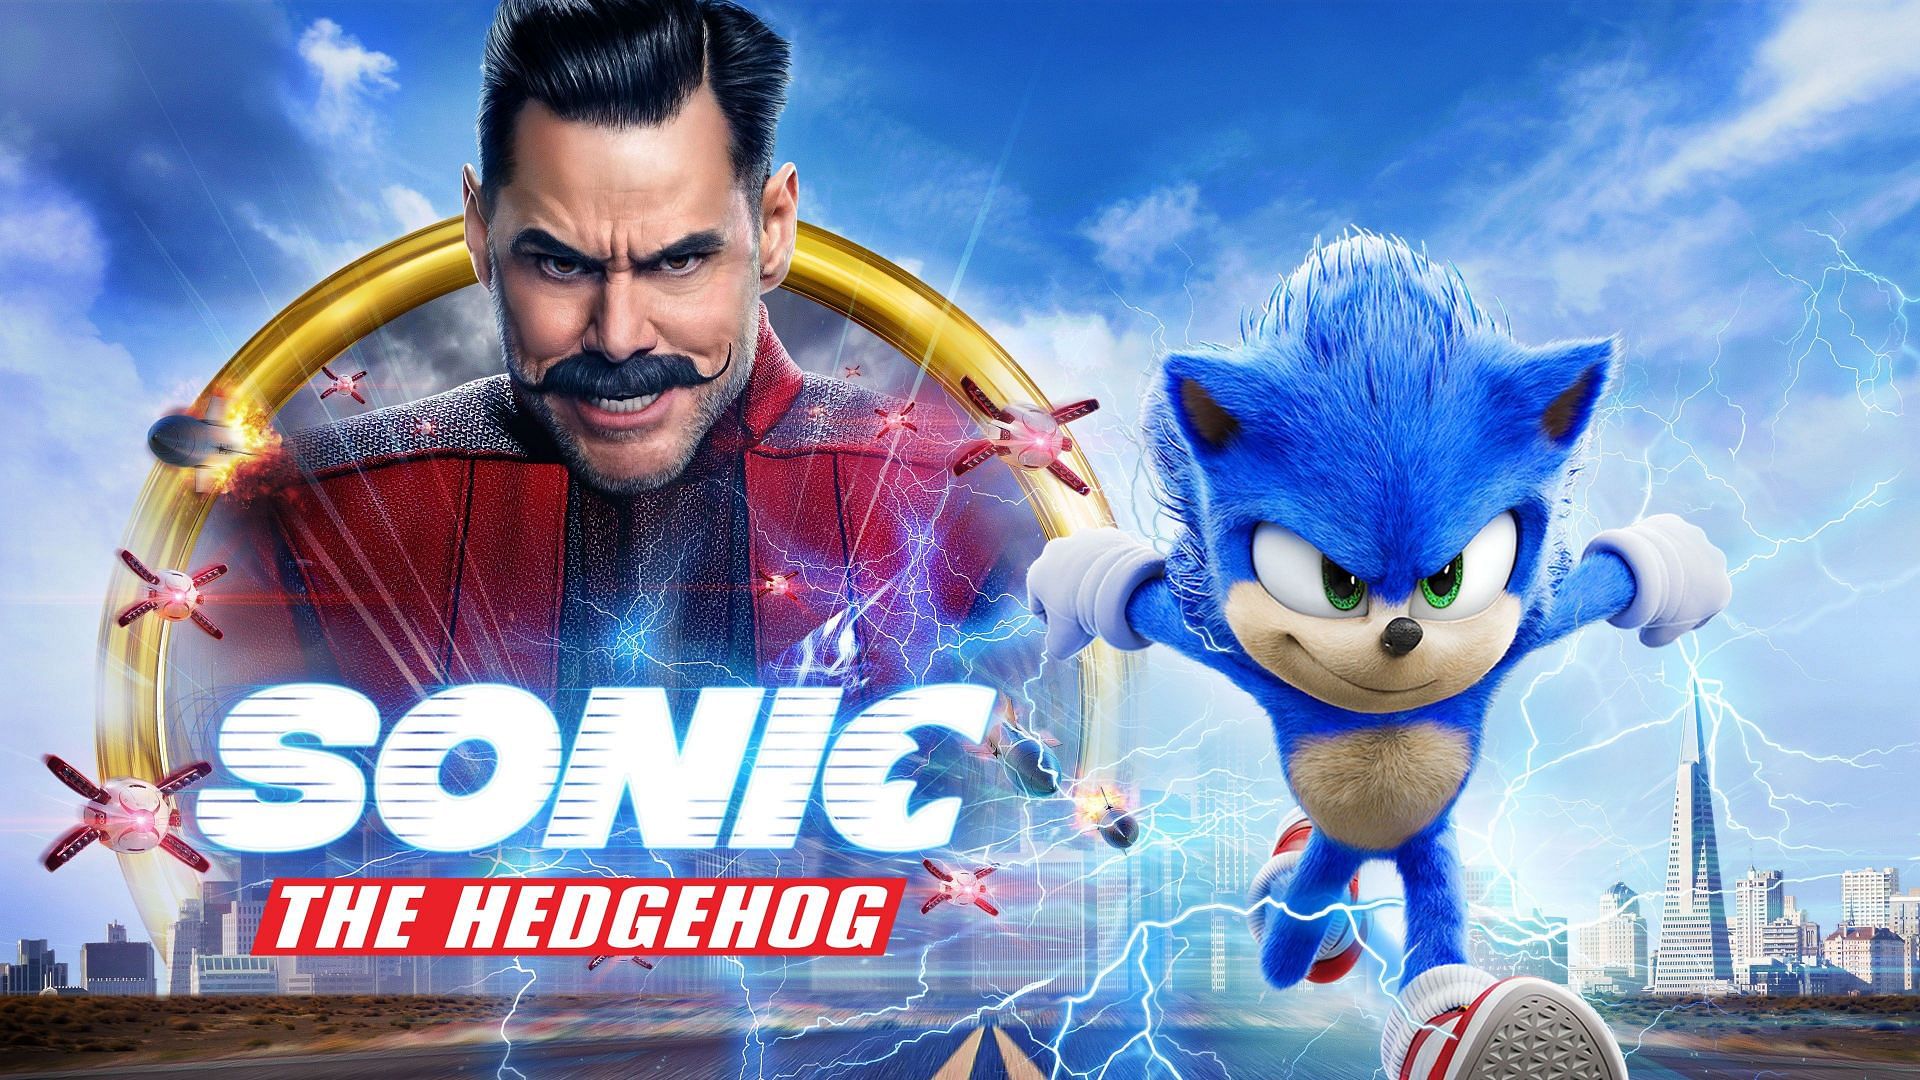 Sonic The Hedgehog (Image via Rotten Tomatoes)